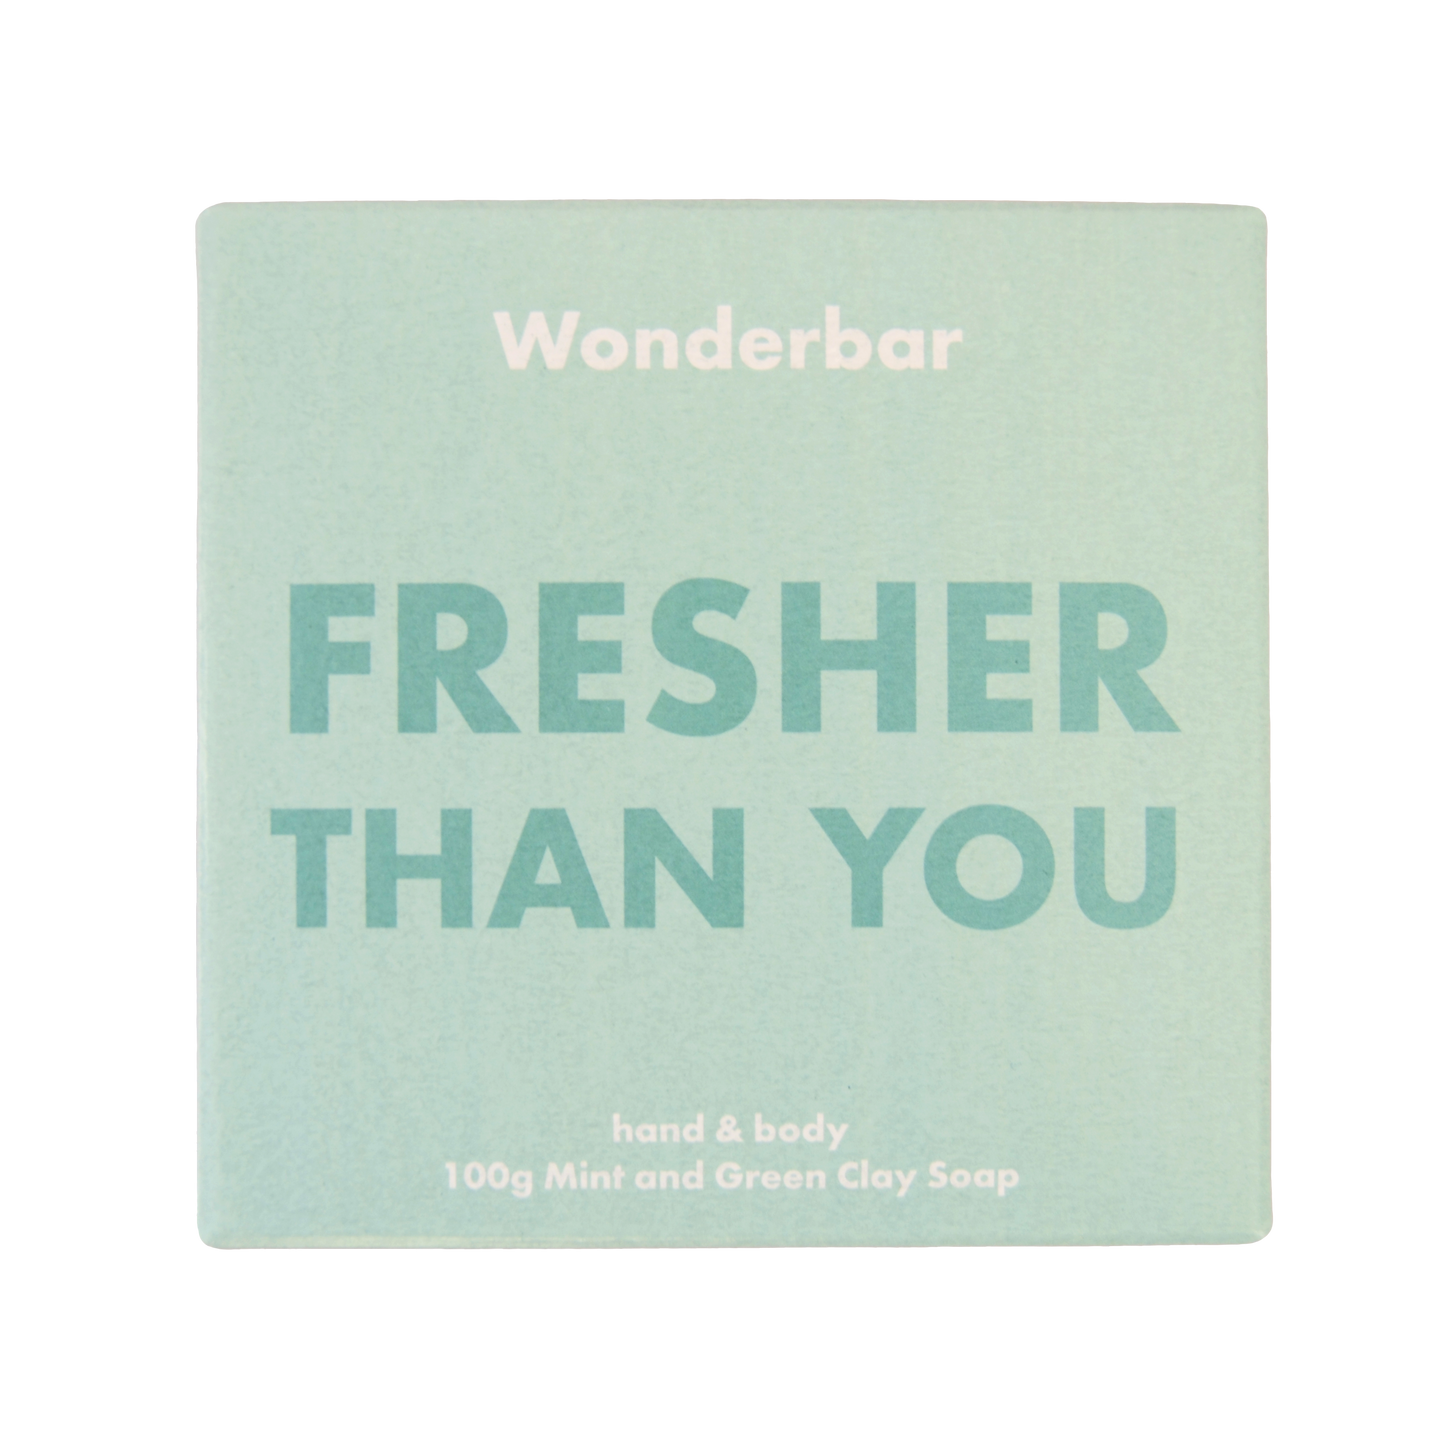 Wonderbar - FRESHER THAN YOU Mint & Green Clay Soap 100g